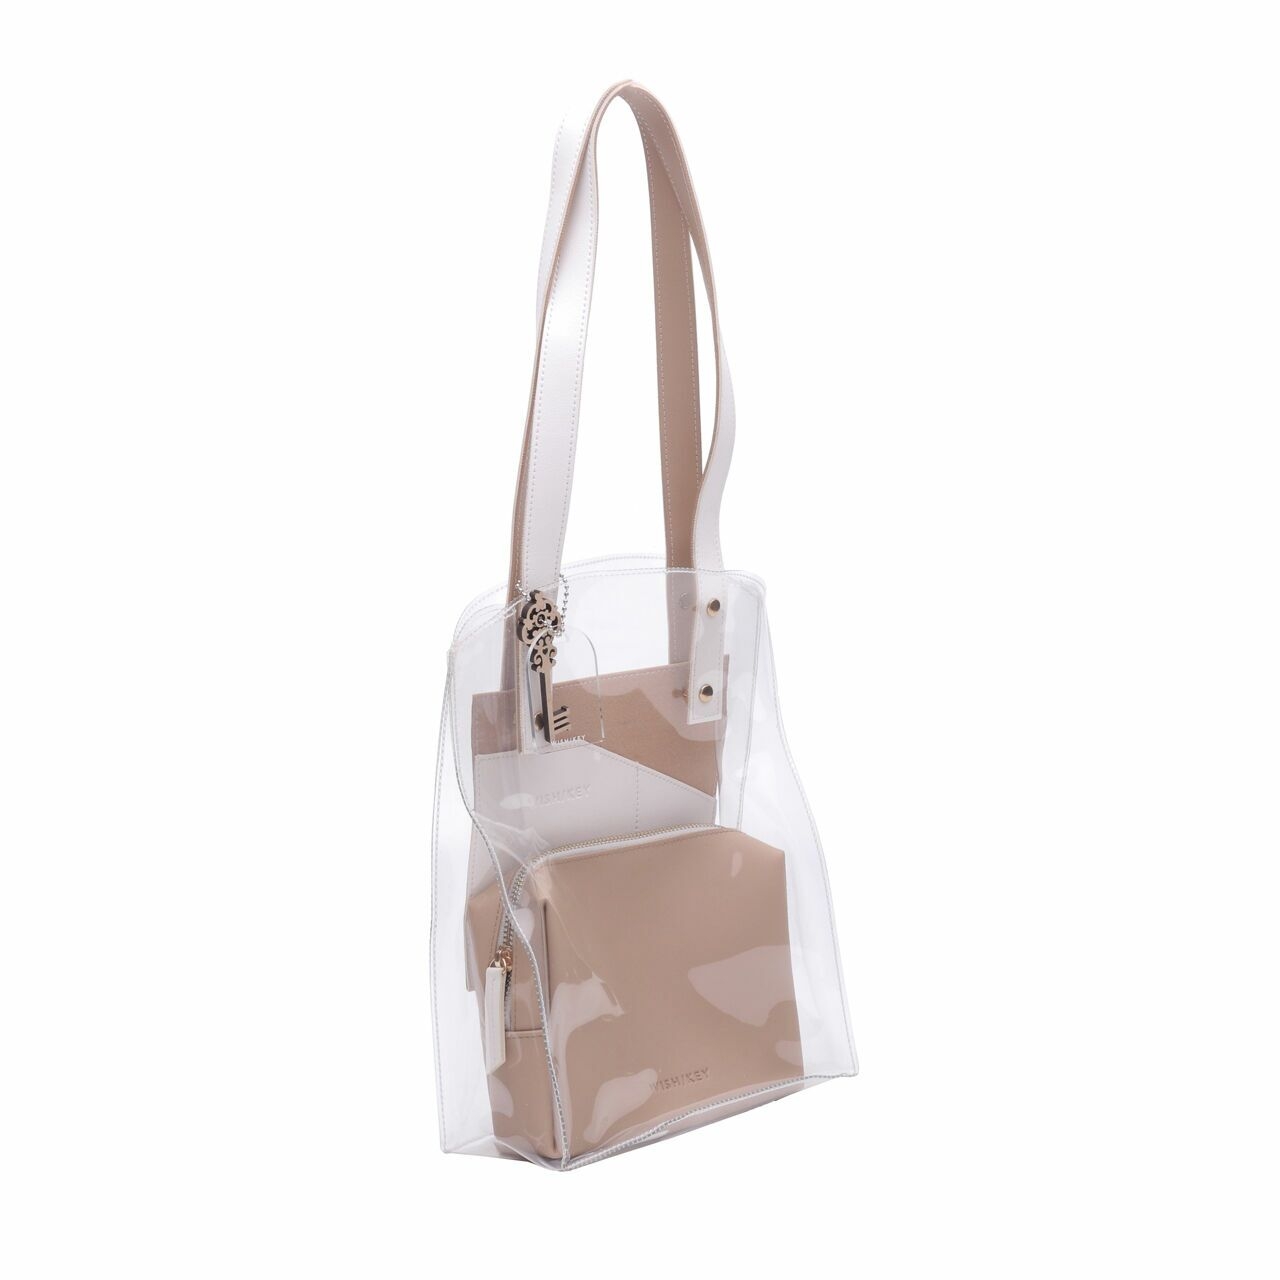 Wish/Key Brown & Clear Tote Bag